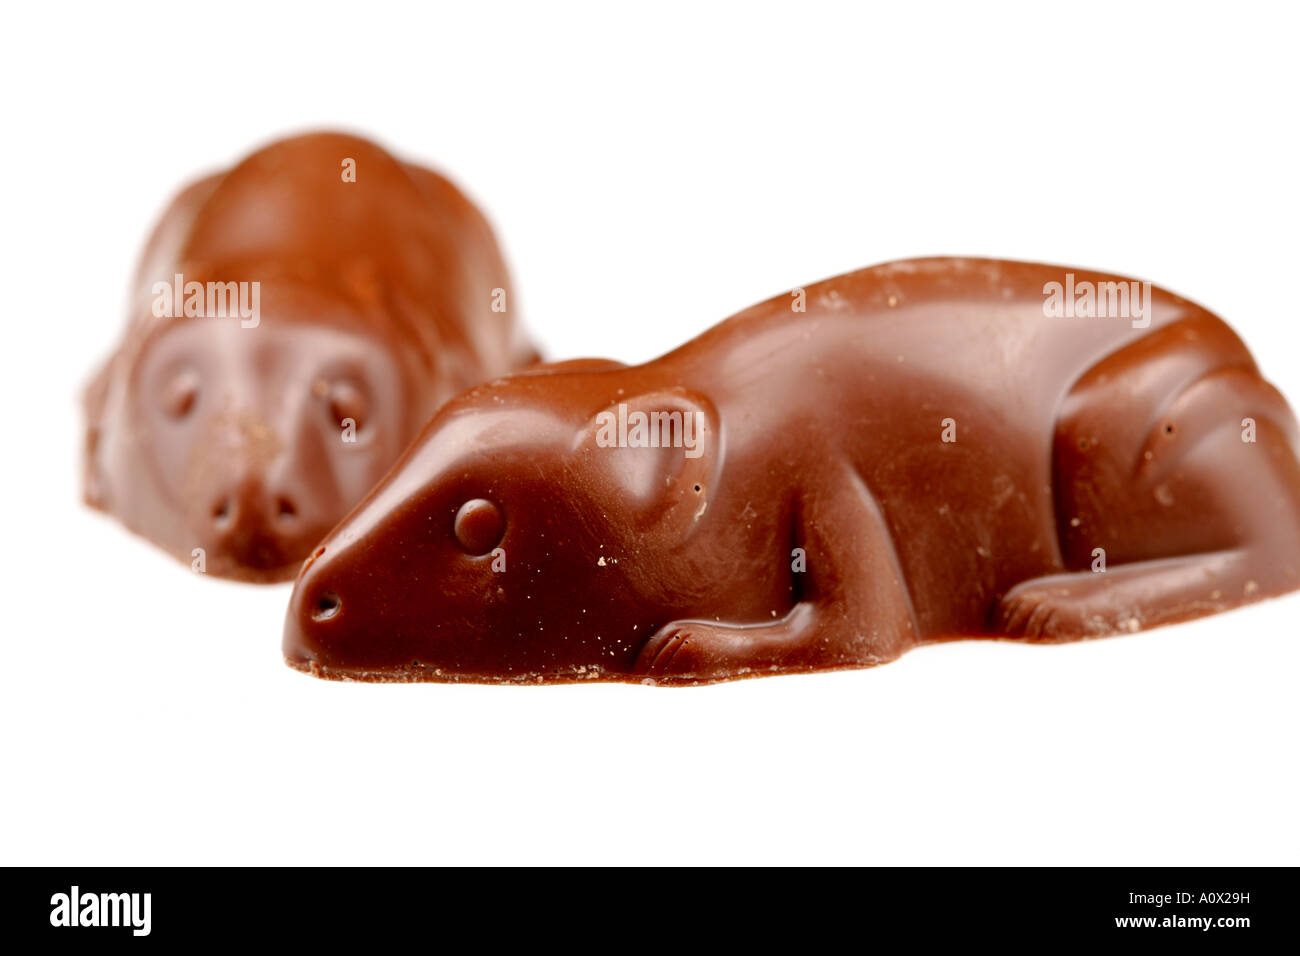 Schokoladenmäuse -Fotos und -Bildmaterial in hoher Auflösung – Alamy